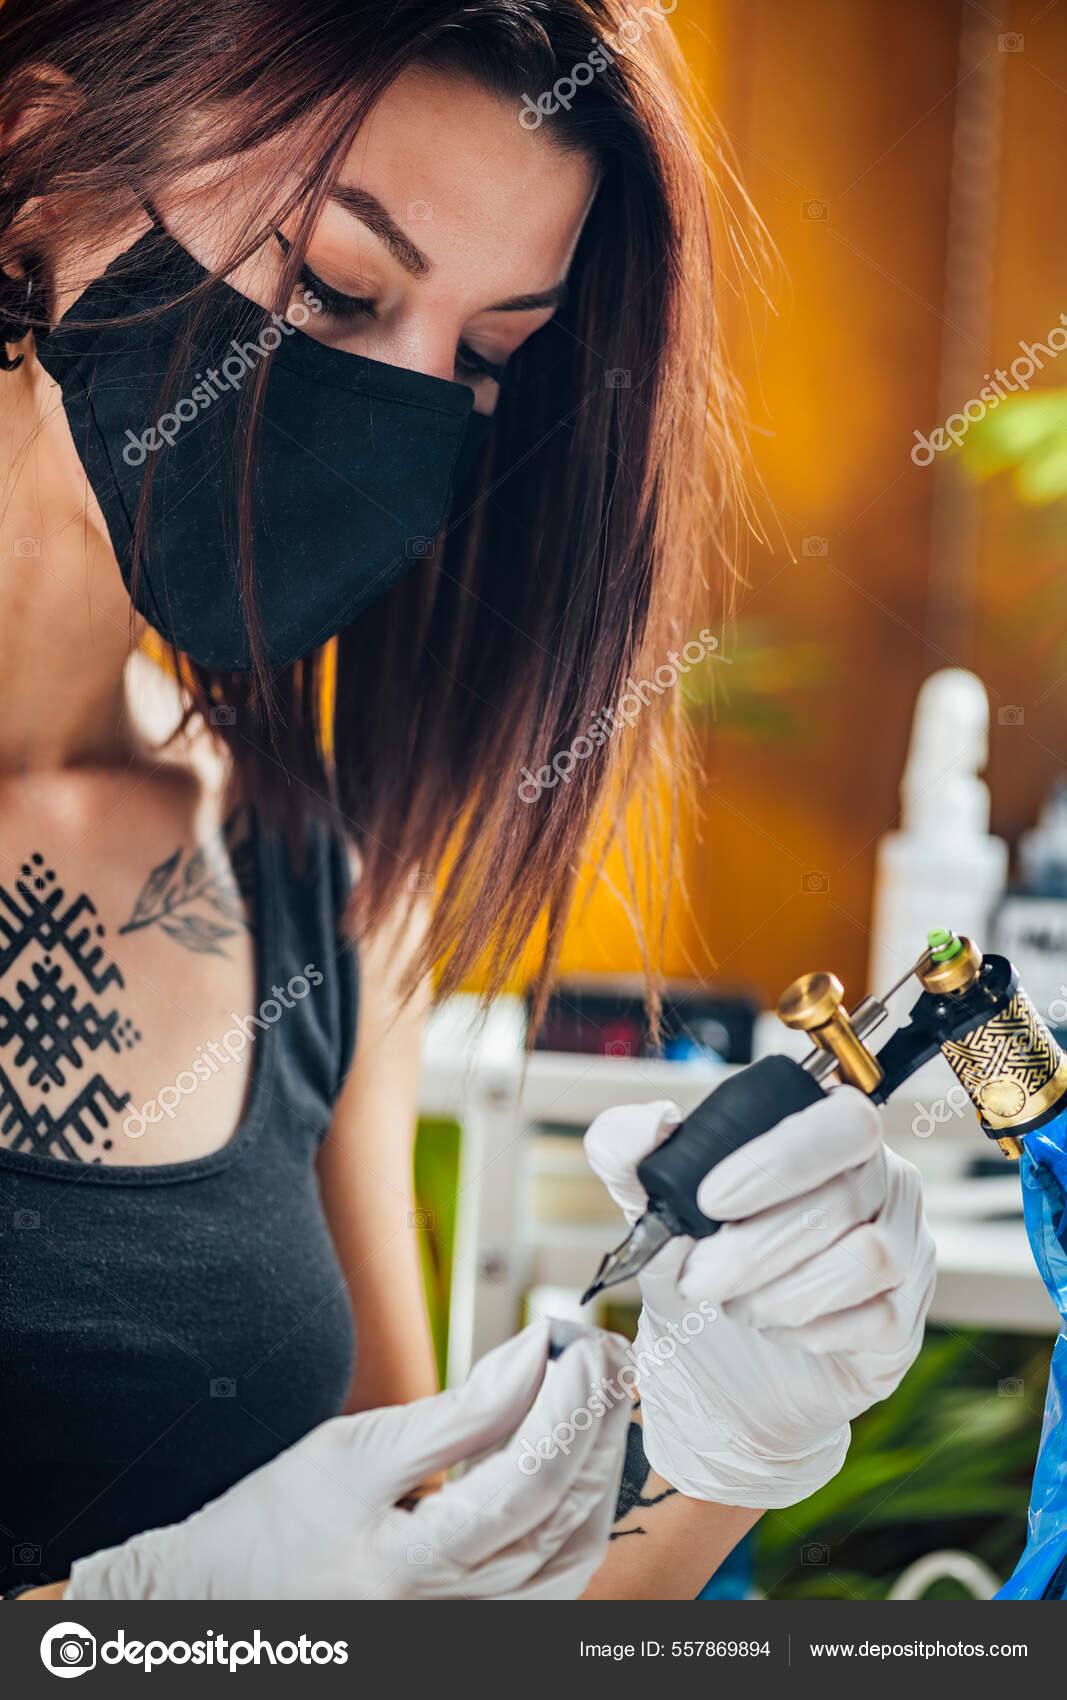 https://st.depositphotos.com/6644020/55786/i/1600/depositphotos_557869894-stock-photo-female-tattoo-artist-prepares-tattoo.jpg